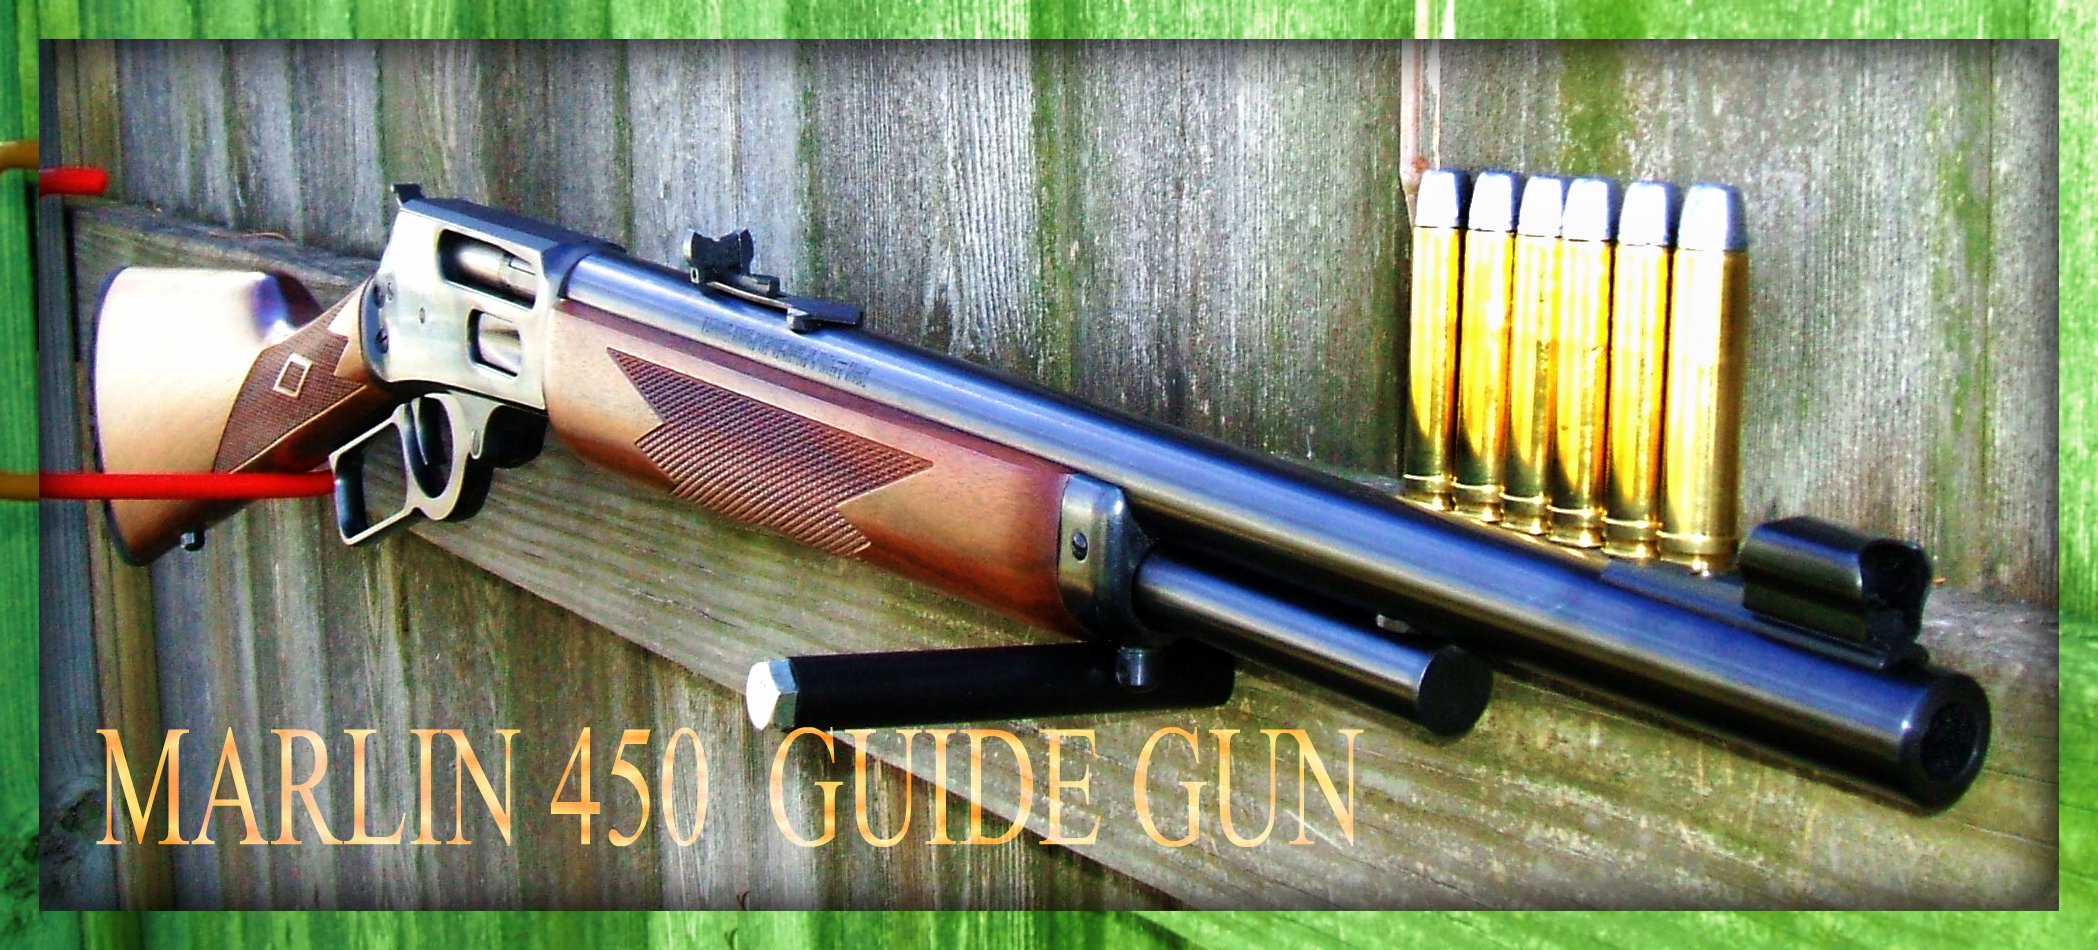 Marlin Hunting Rifle Weapon Gun Wallpaper Background